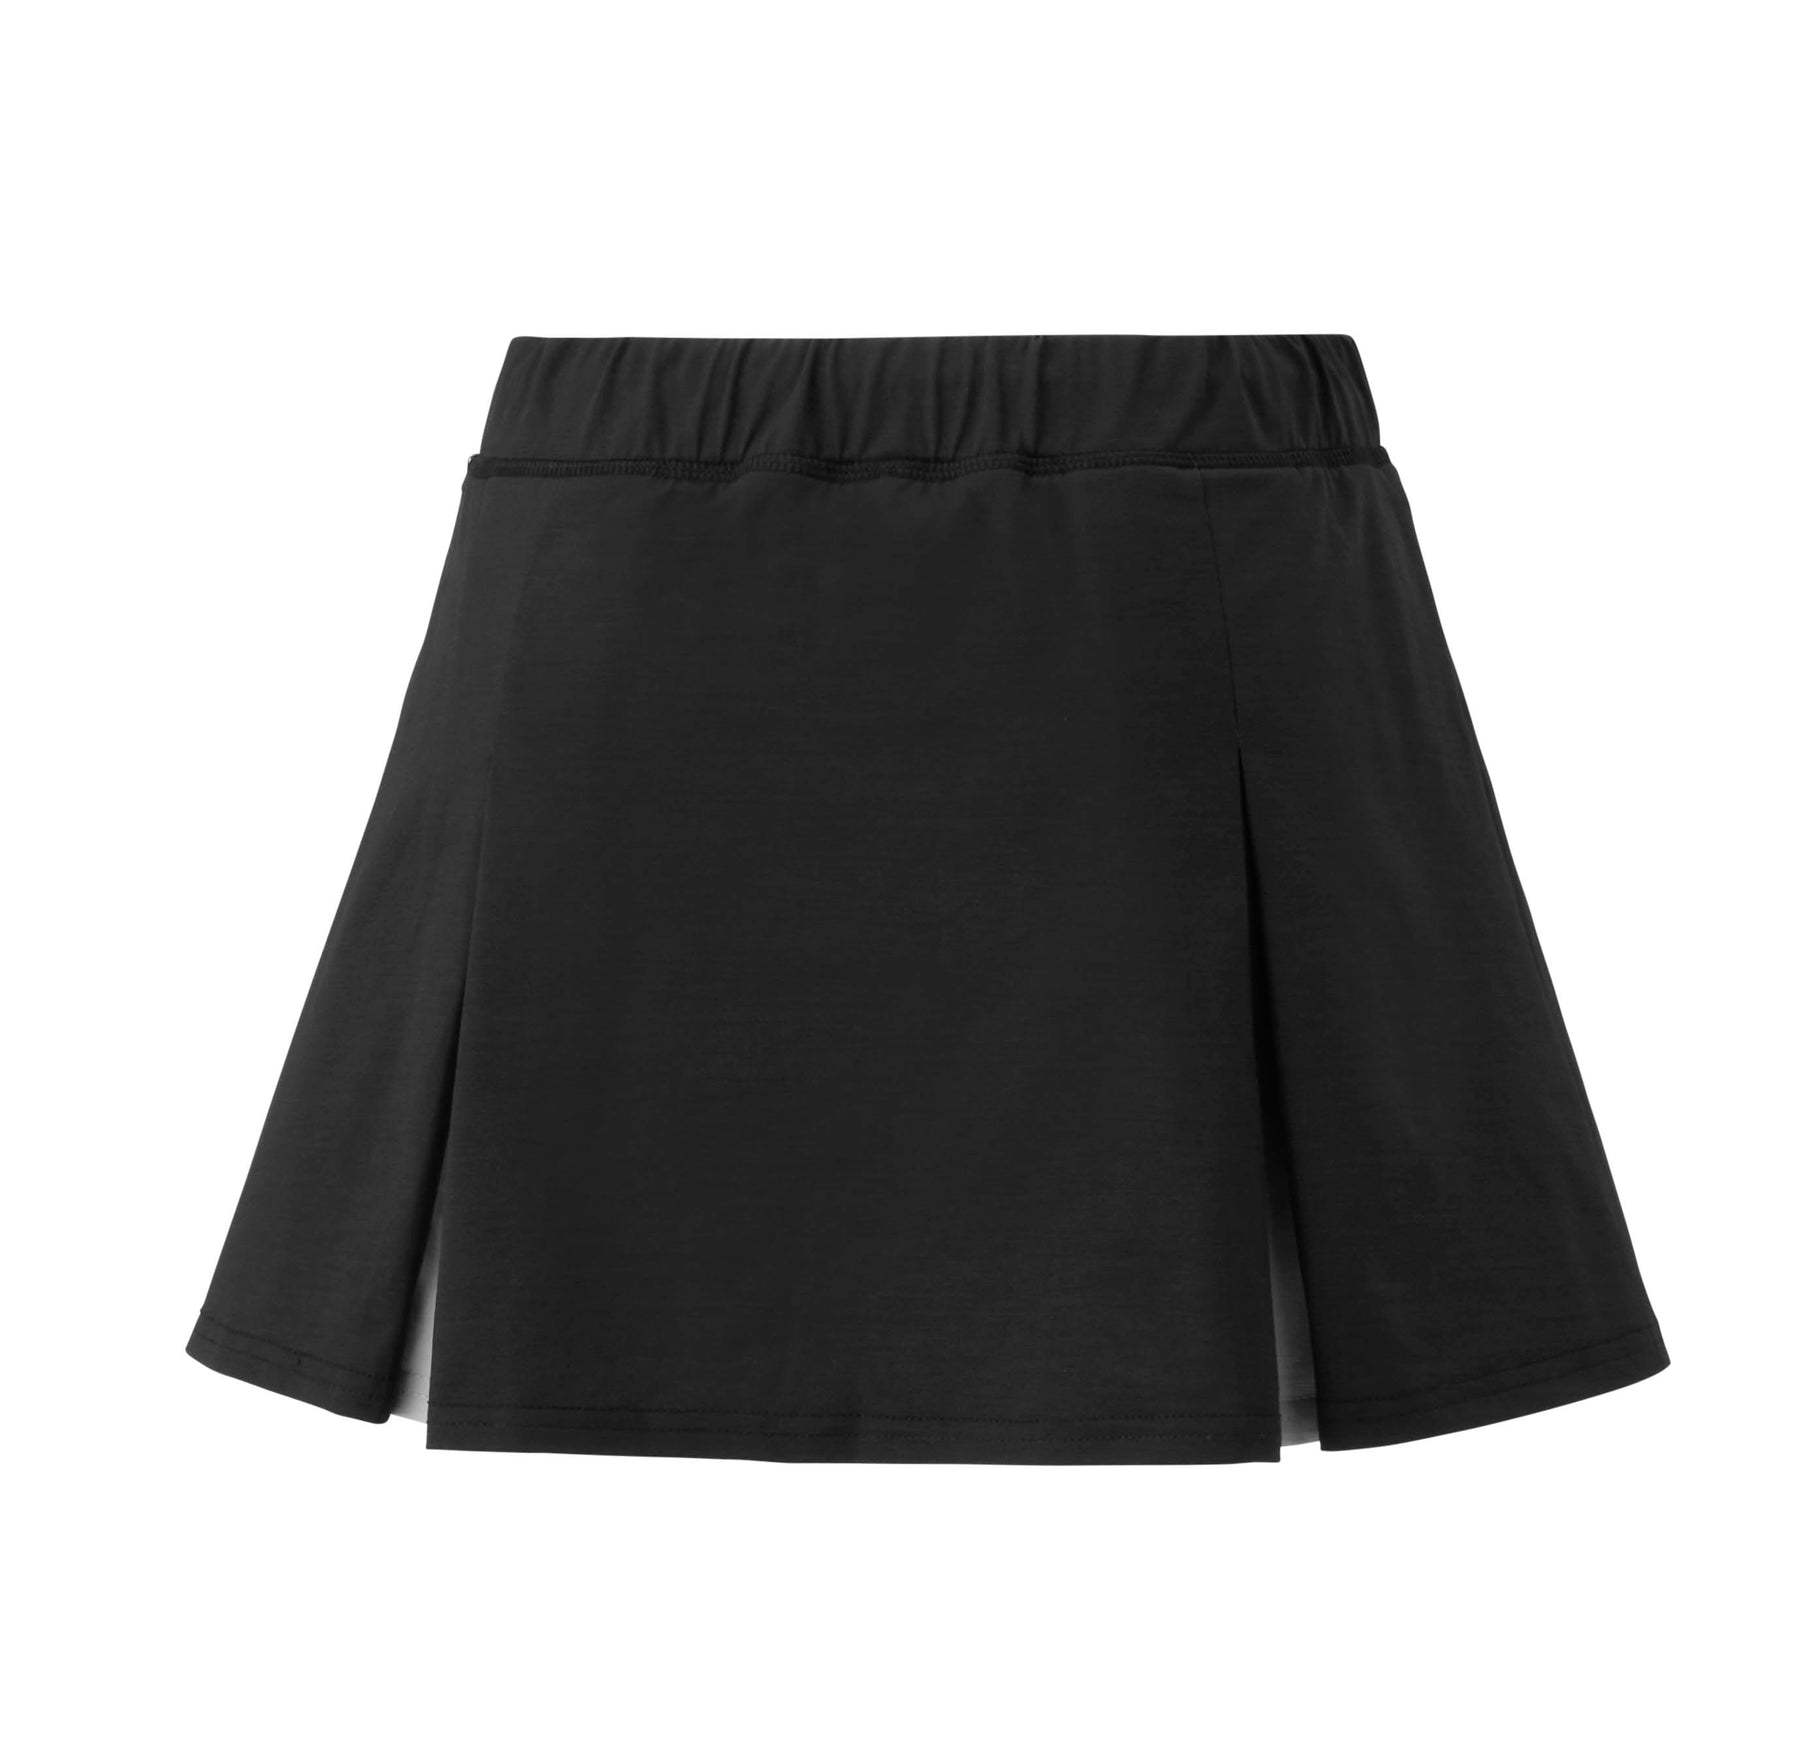 Yonex 26125 Skirt (With Inner Shorts) (Black)